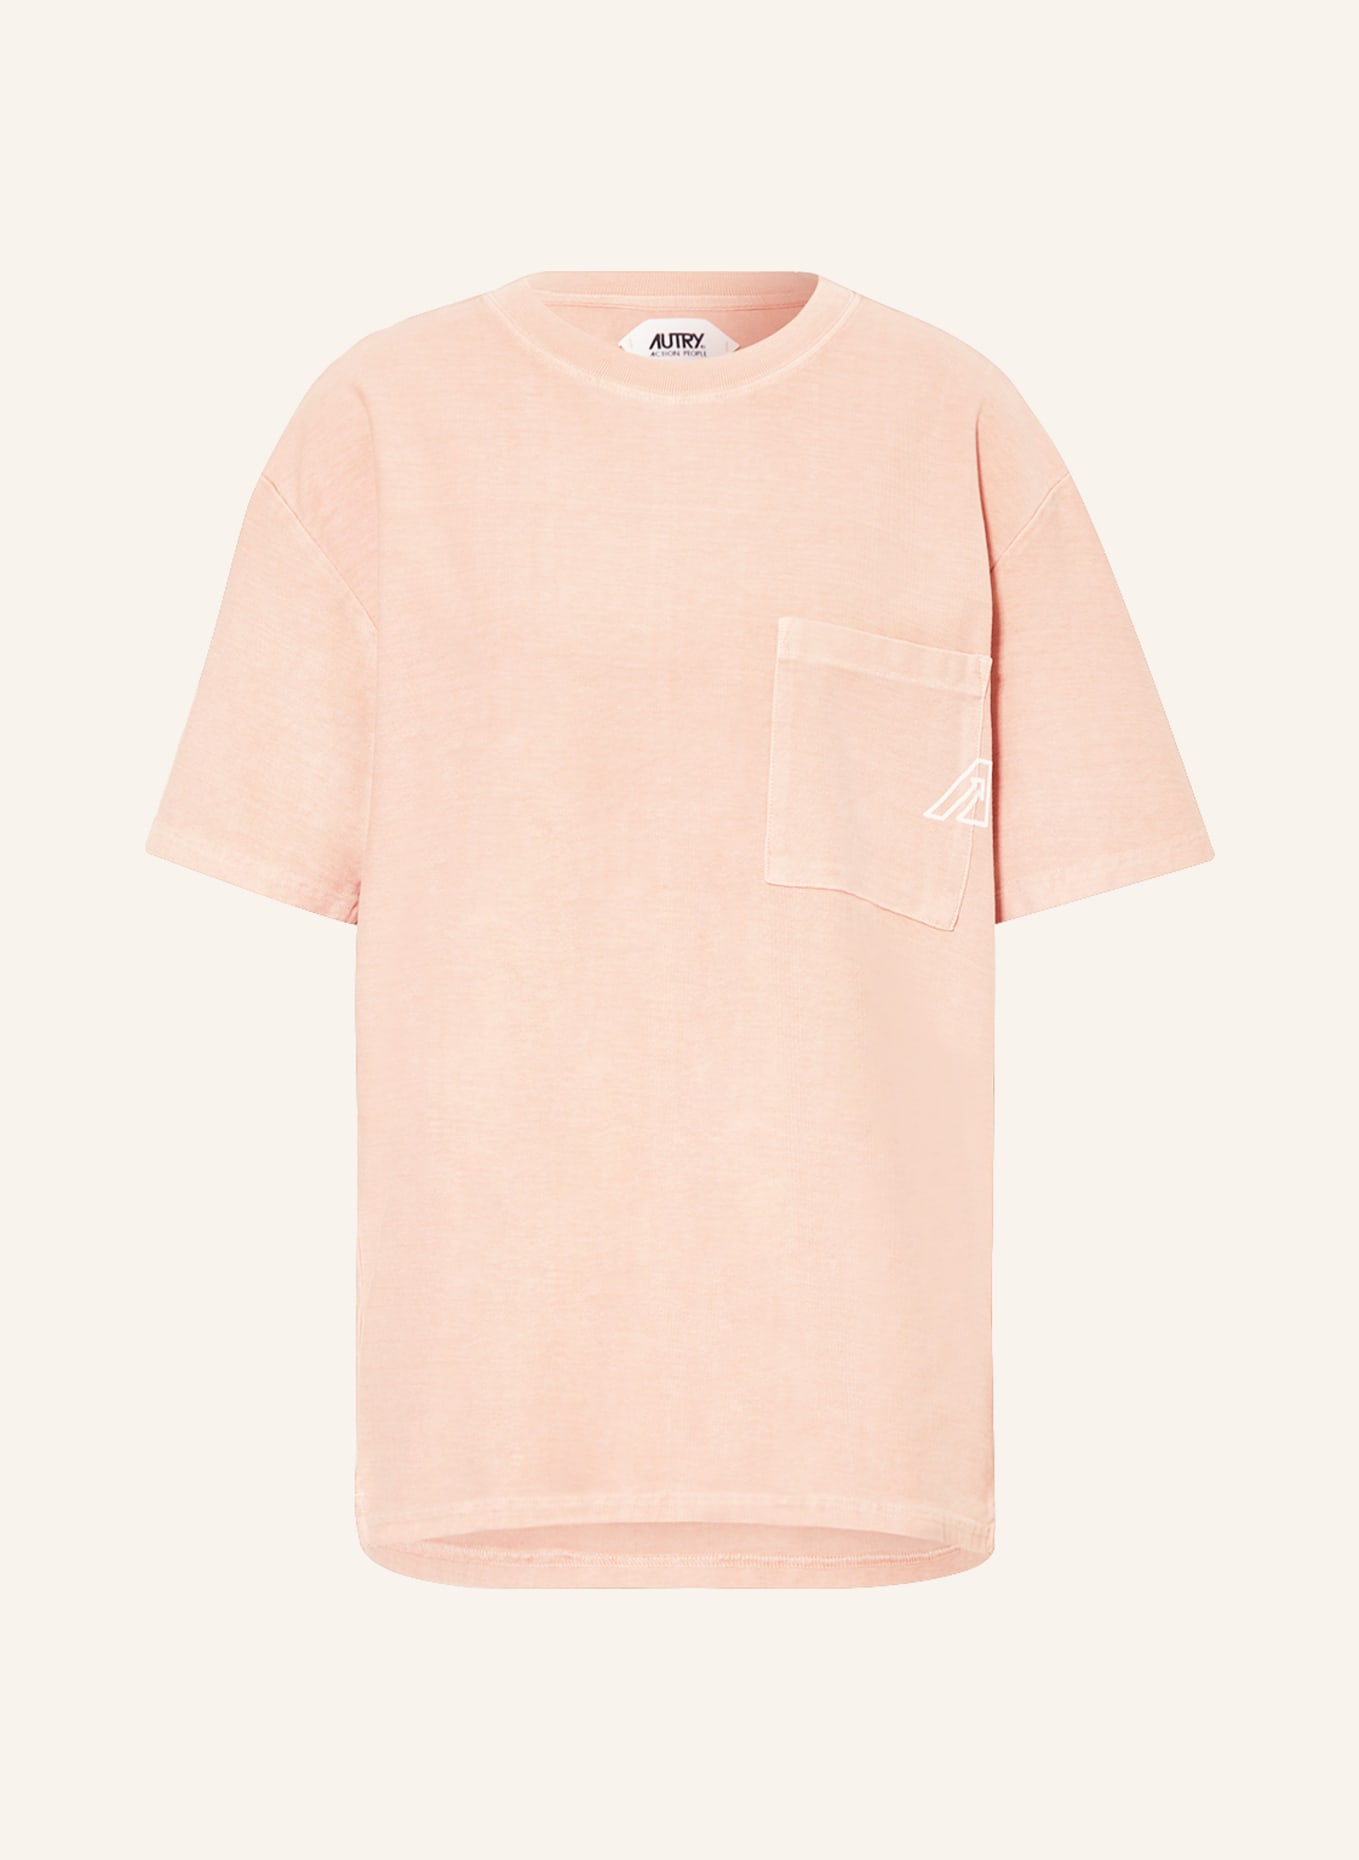 AUTRY T-Shirt AMOUR, Farbe: ROSA (Bild 1)